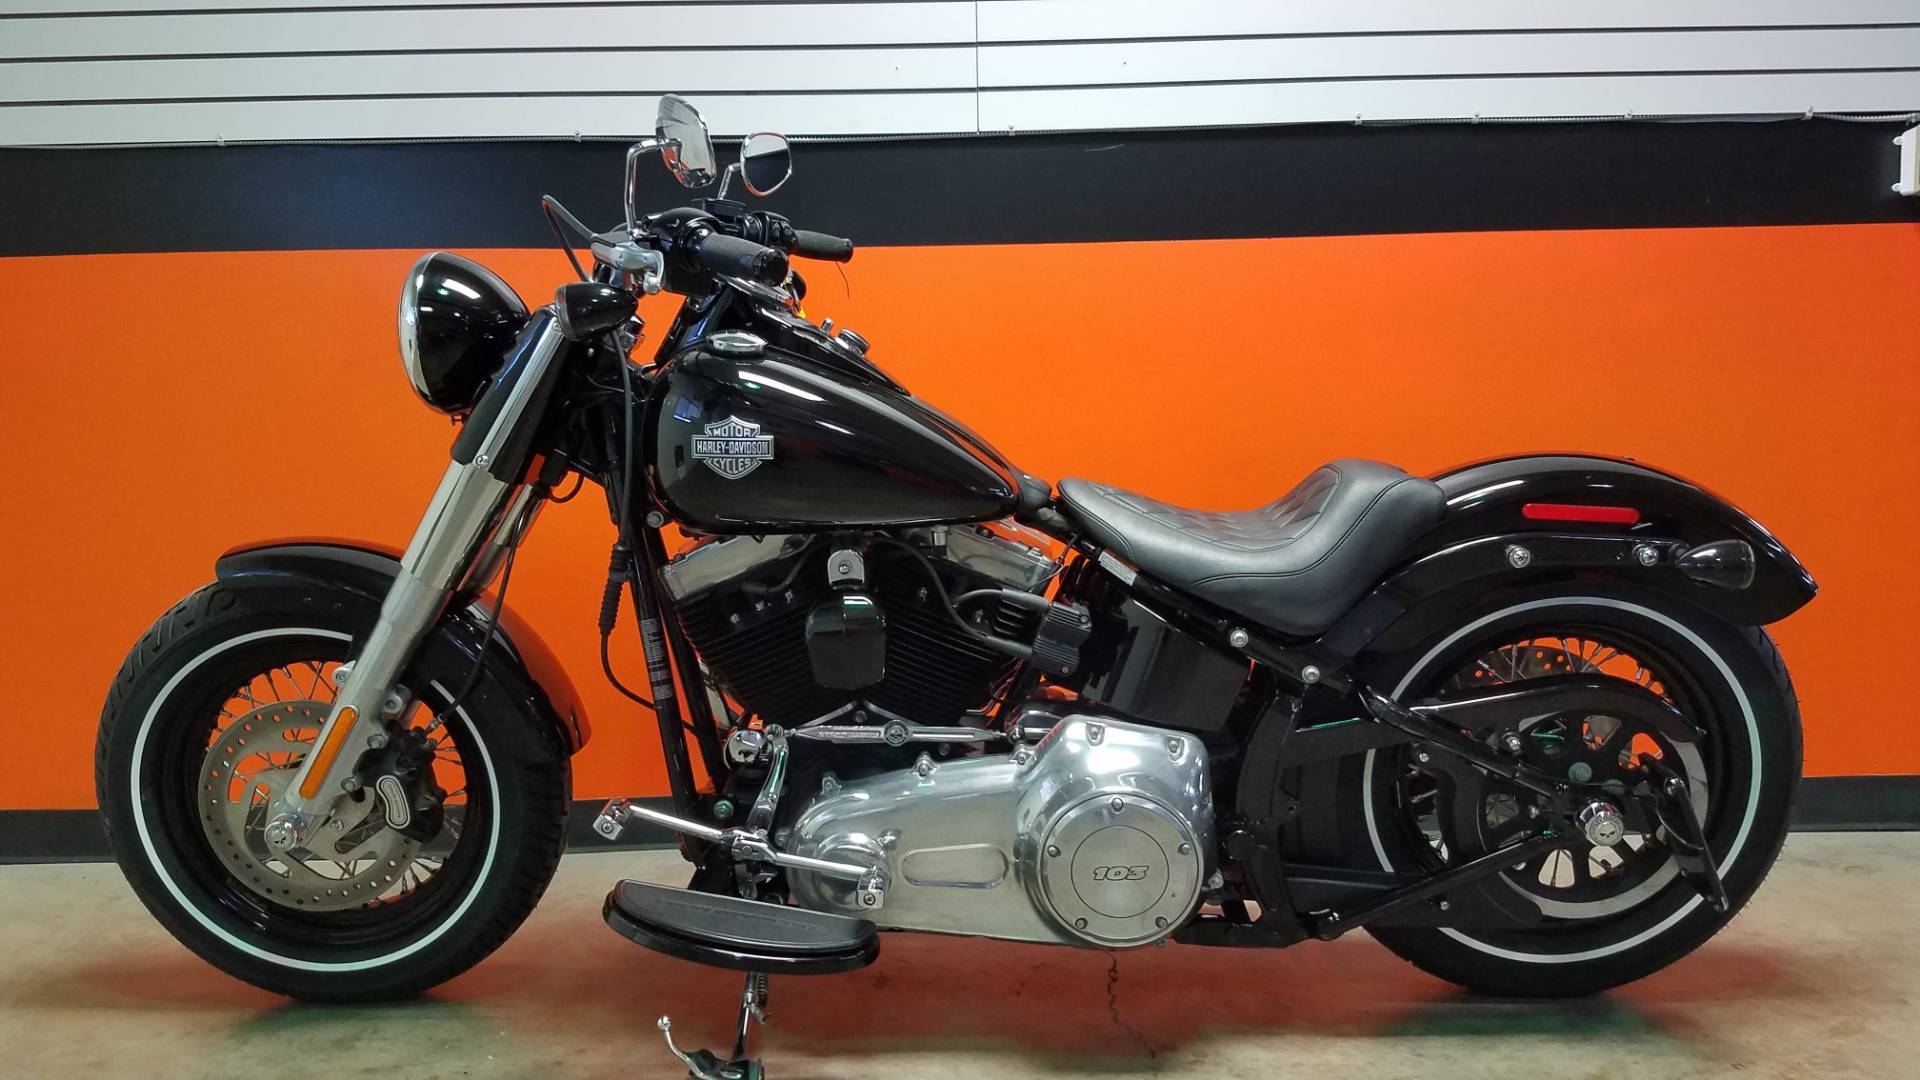 Used 2016 Harley Davidson Softail Slim Vivid Black Motorcycles In Cayuta Ny 012862za